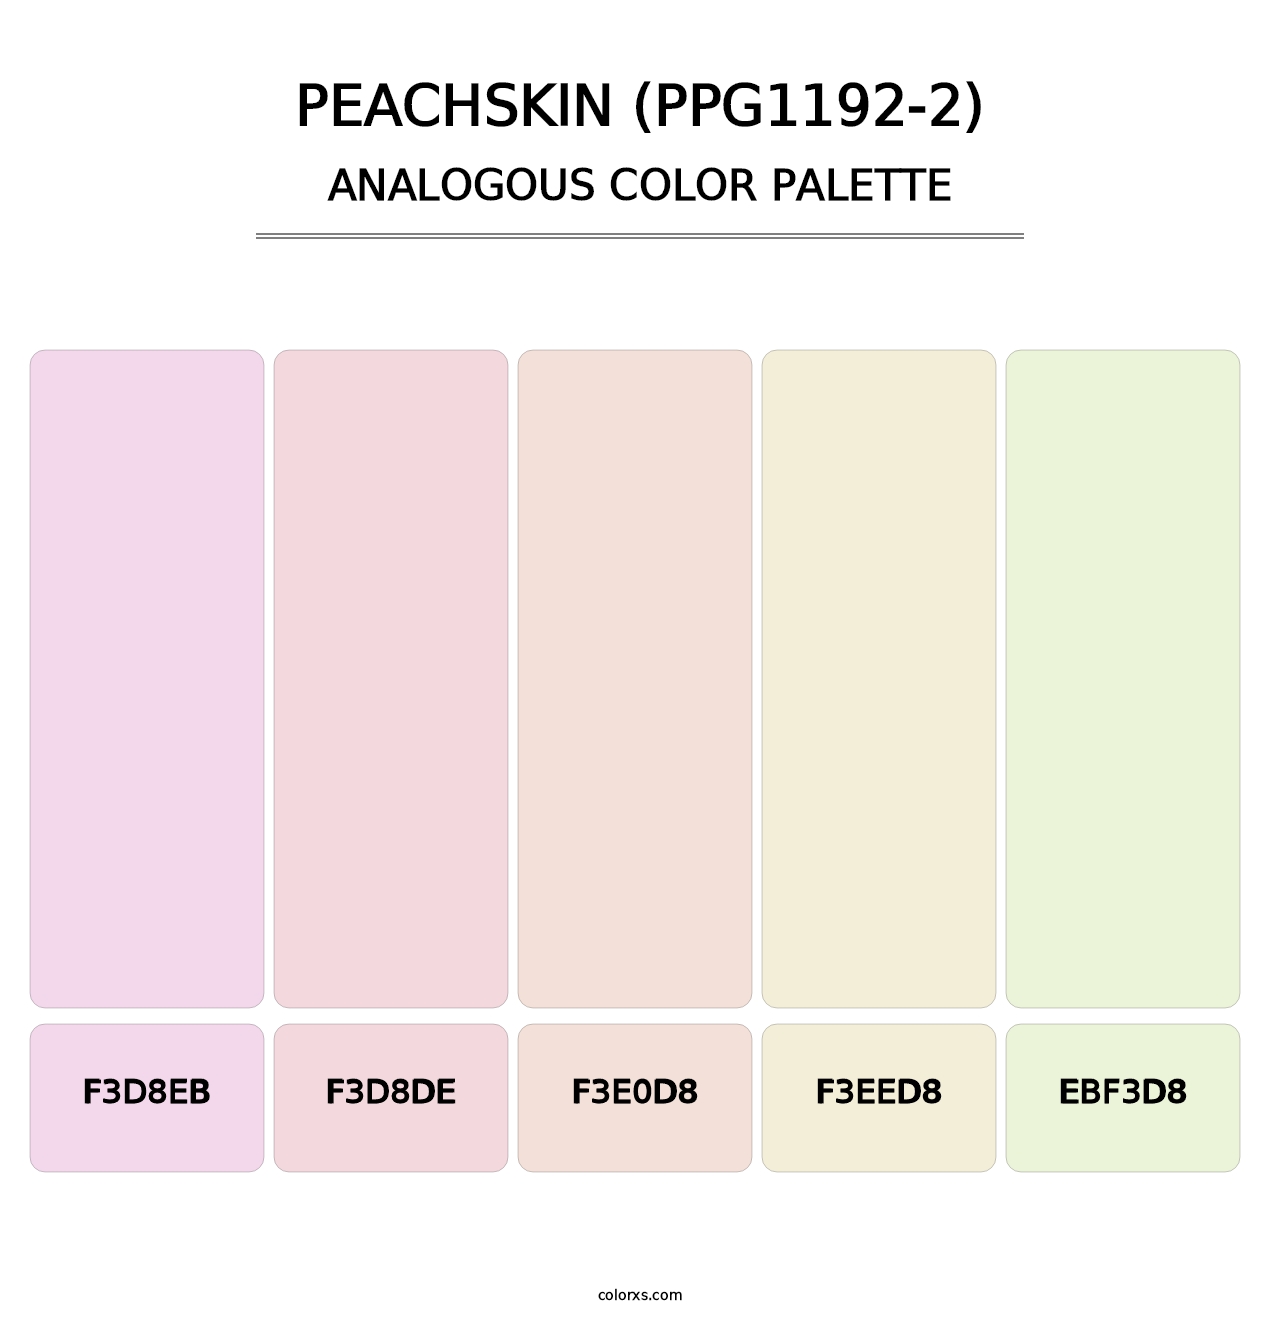 Peachskin (PPG1192-2) - Analogous Color Palette